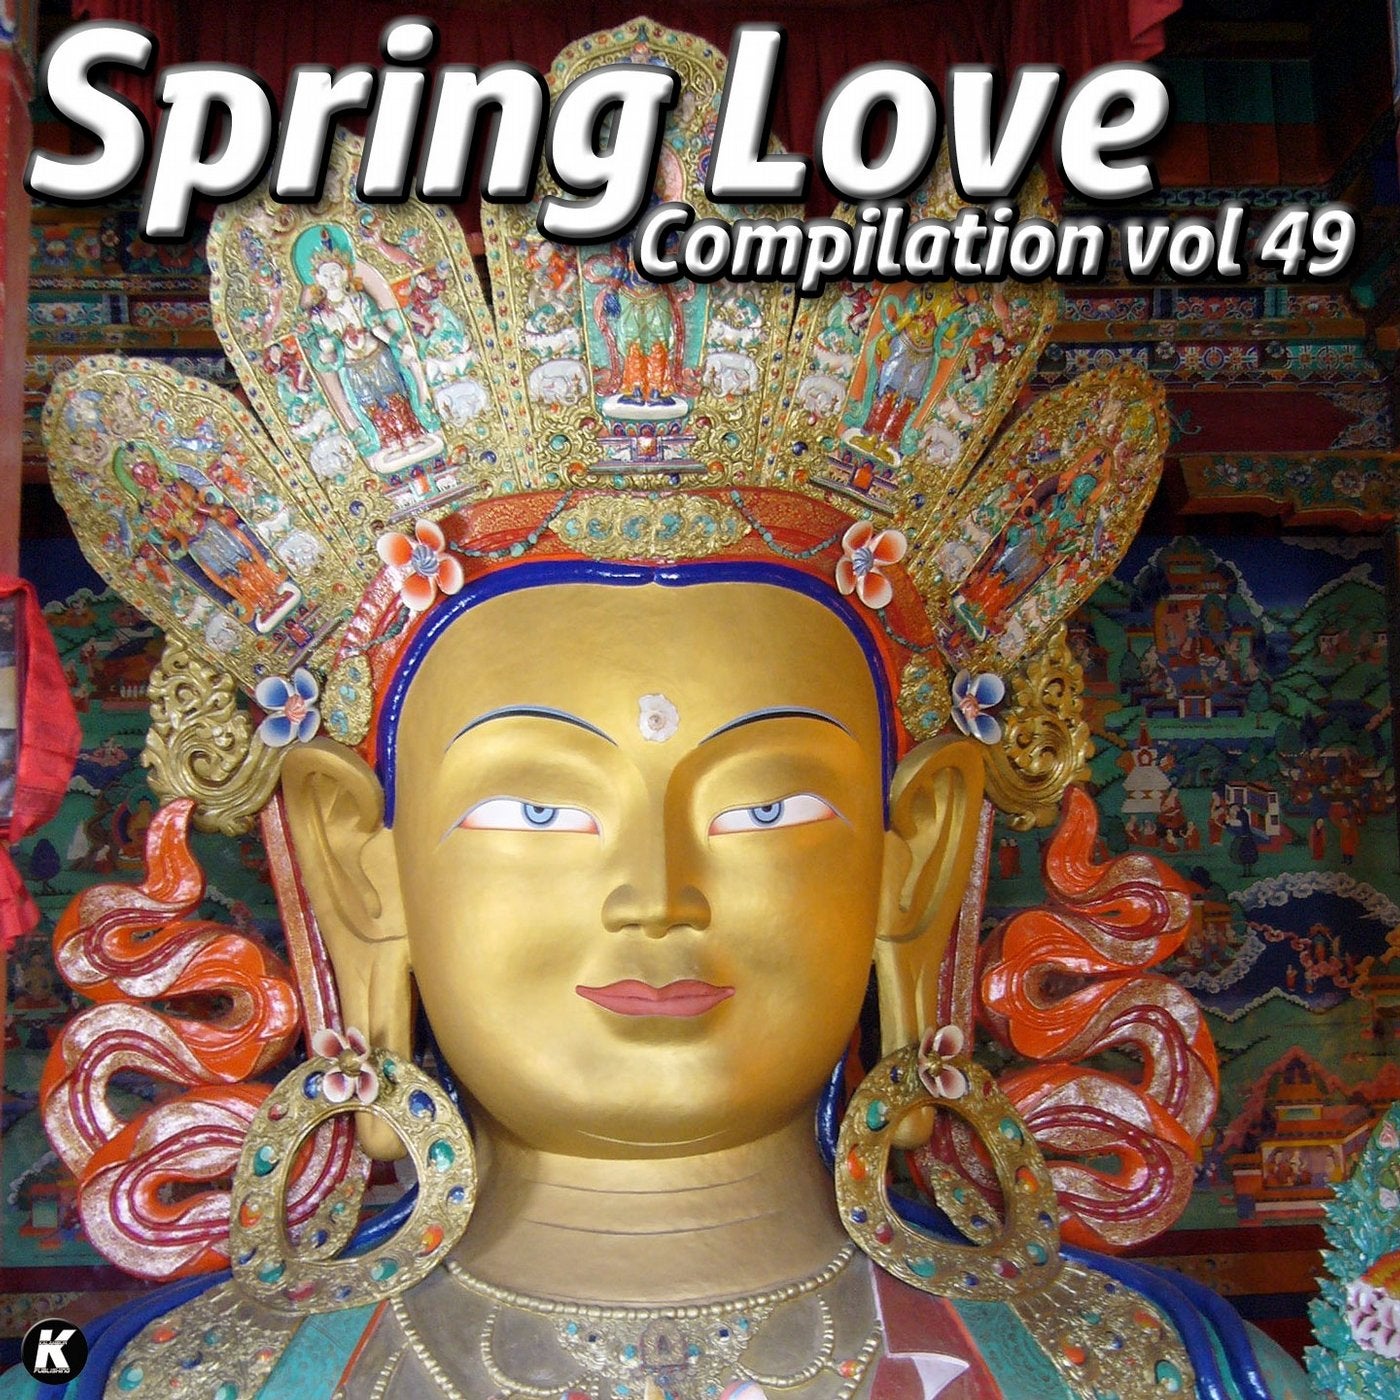 SPRING LOVE COMPILATION VOL 49